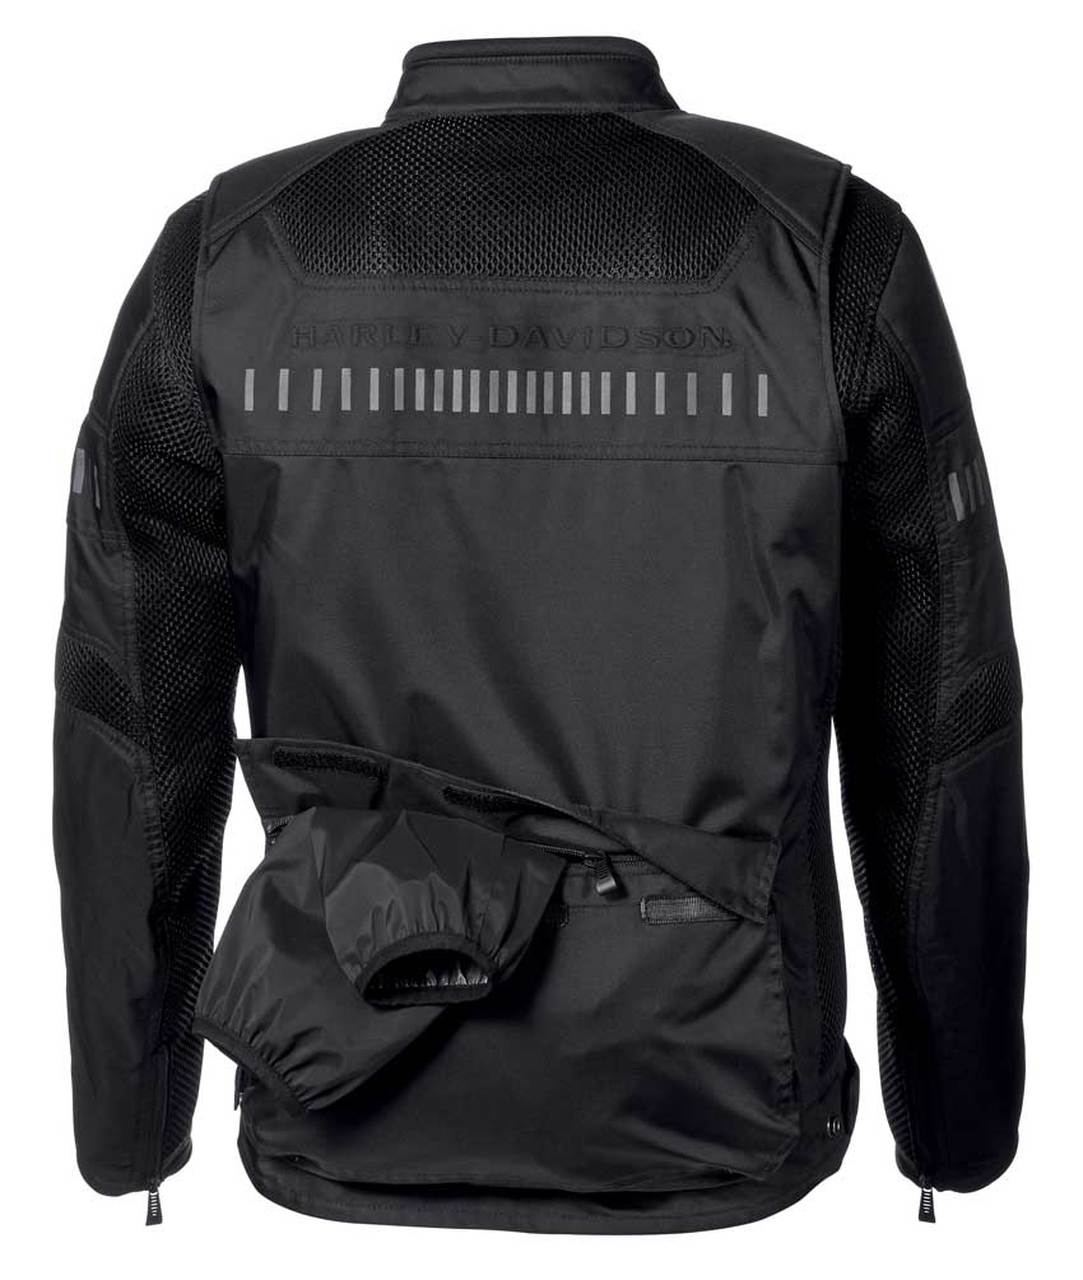 Harley-Davidson® Men’s Manakiki Slim Fit Riding Jacket, Black